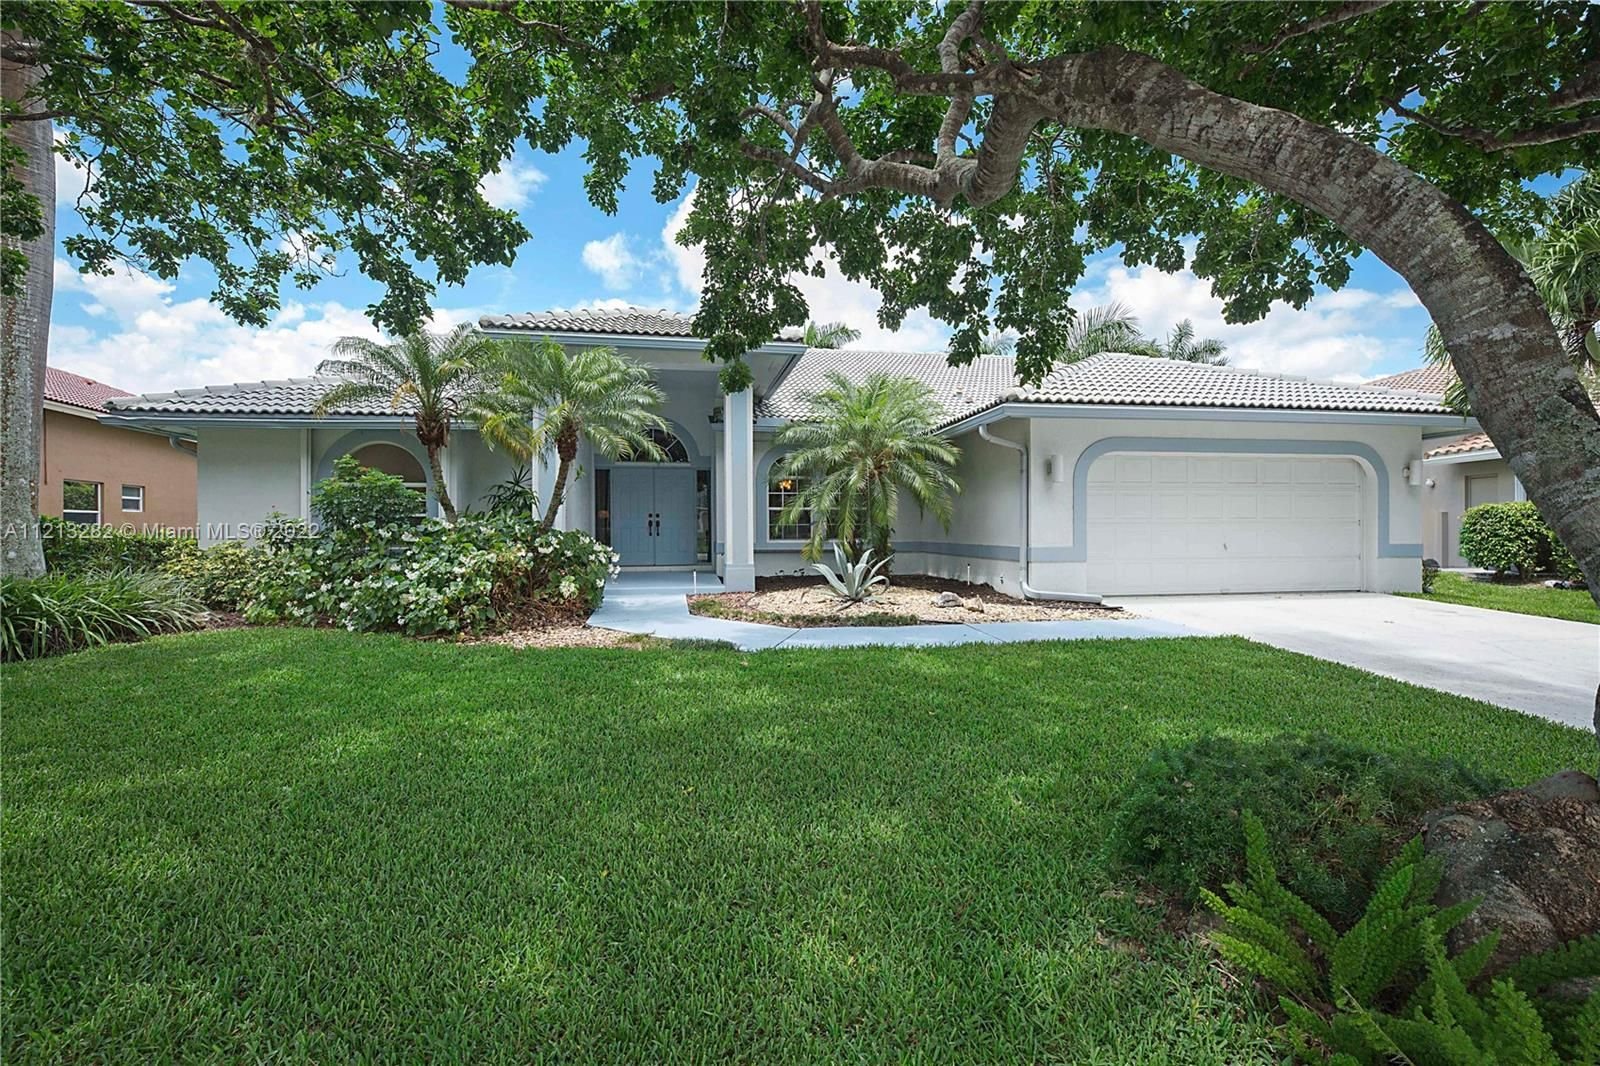 Real estate property located at 4941 Kensington Cir, Broward County, Coral Springs, FL